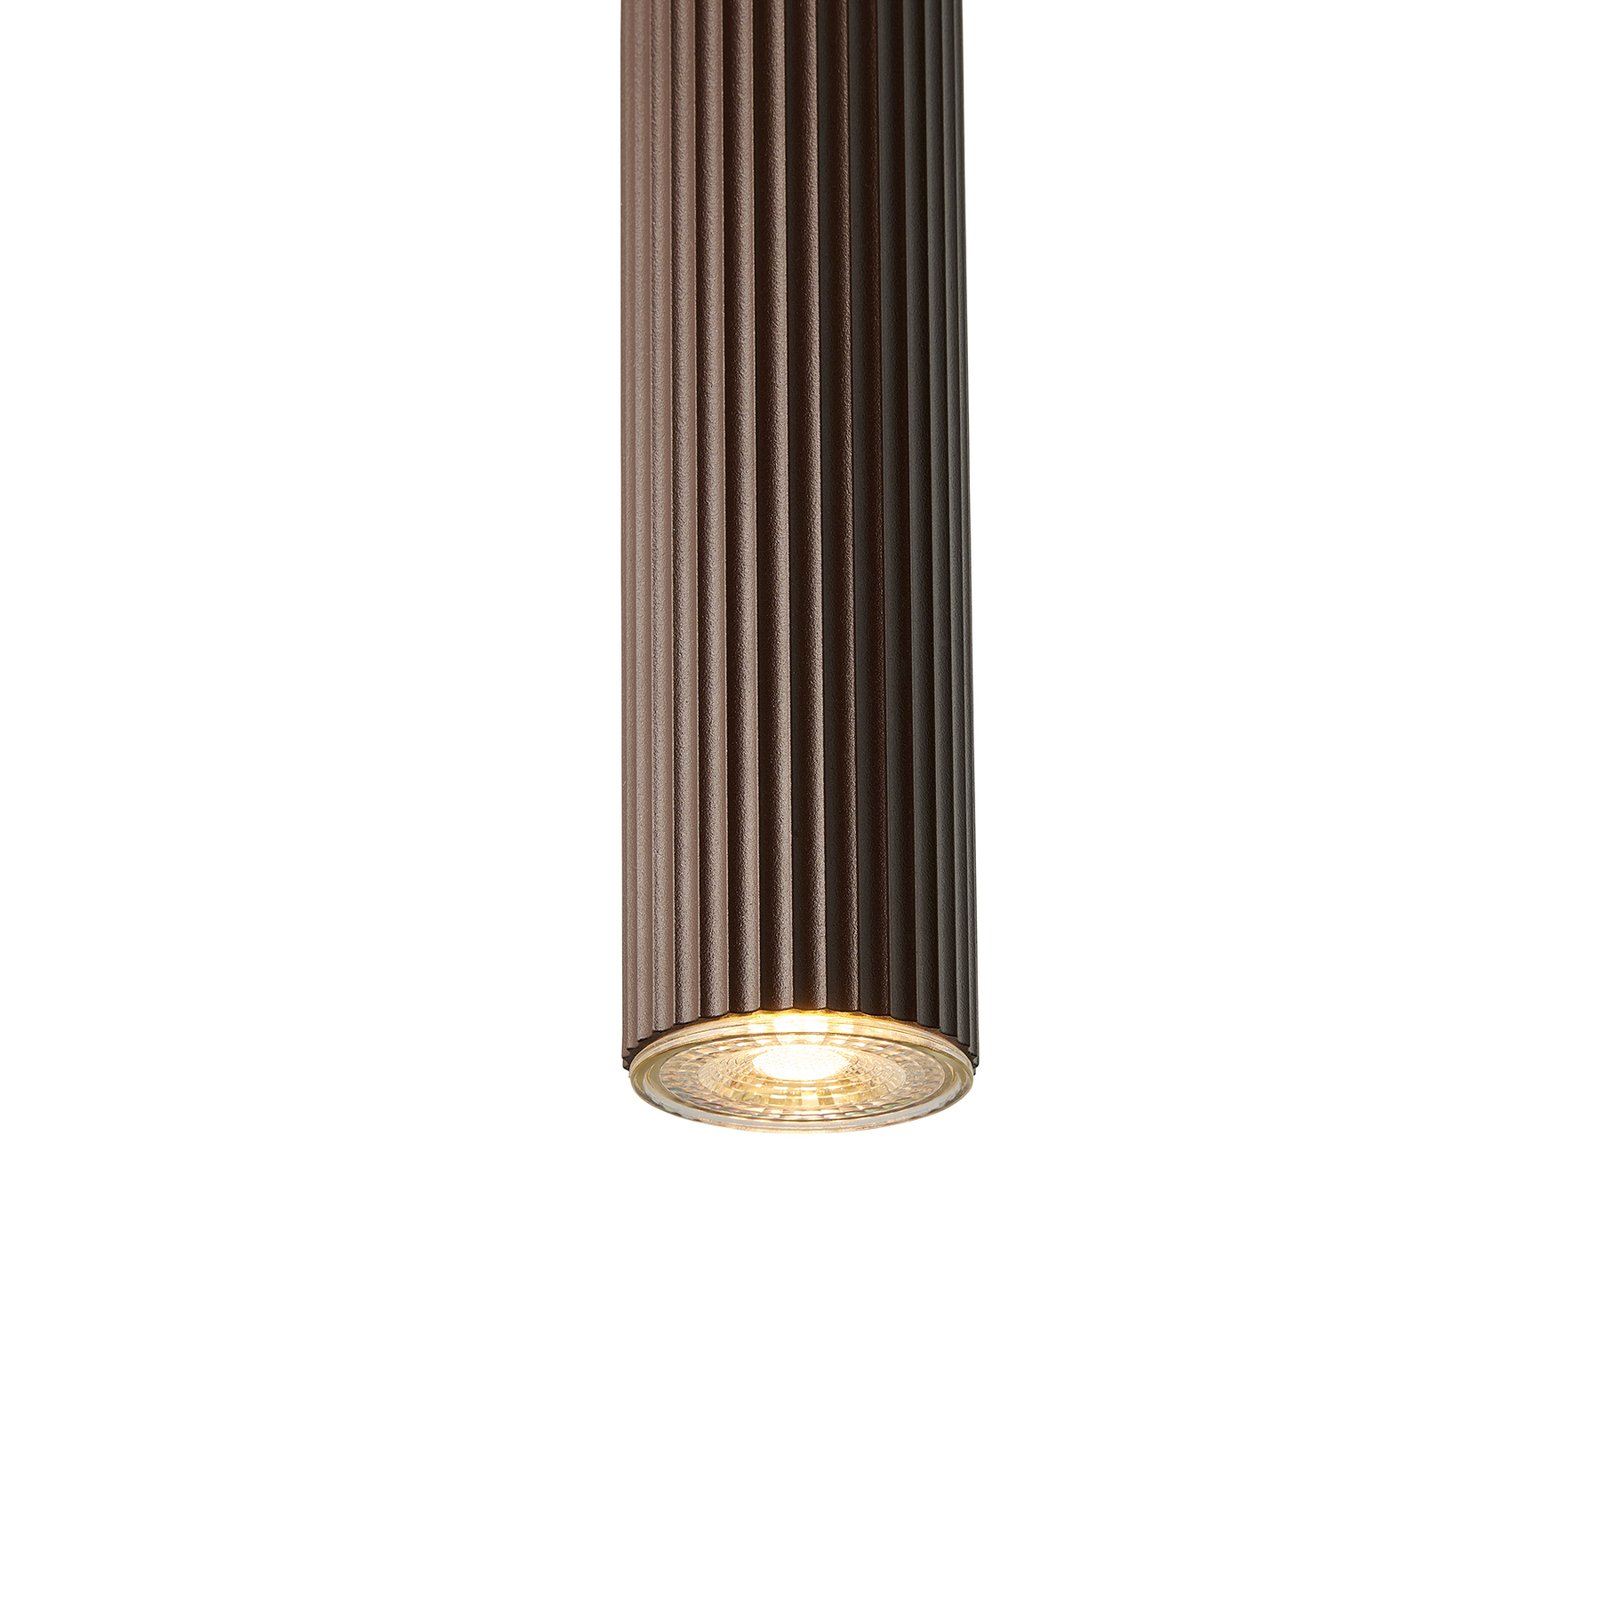 Vico pendant light, metal shade, 1-bulb, brown metallic